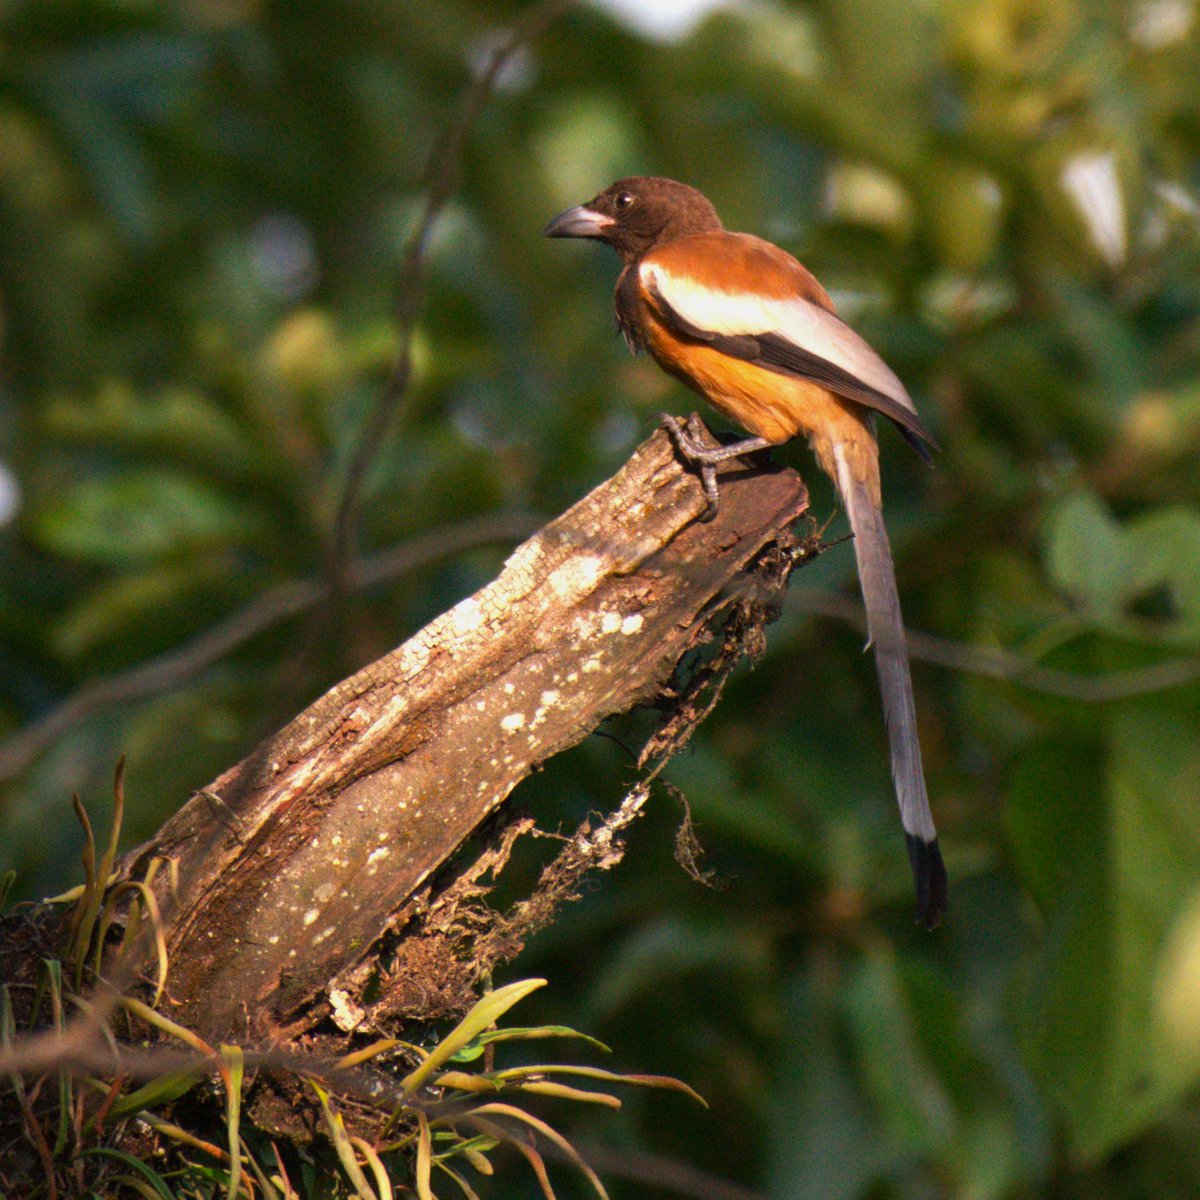 Feasting on termite colonies hidden behind tree barks, hopping all over trees, this noisy Rufus treepie is my morning alarm. #BackyardBirds #IndiAves #TwitterNatureCommunity #NaturePhotography #Assam #birding